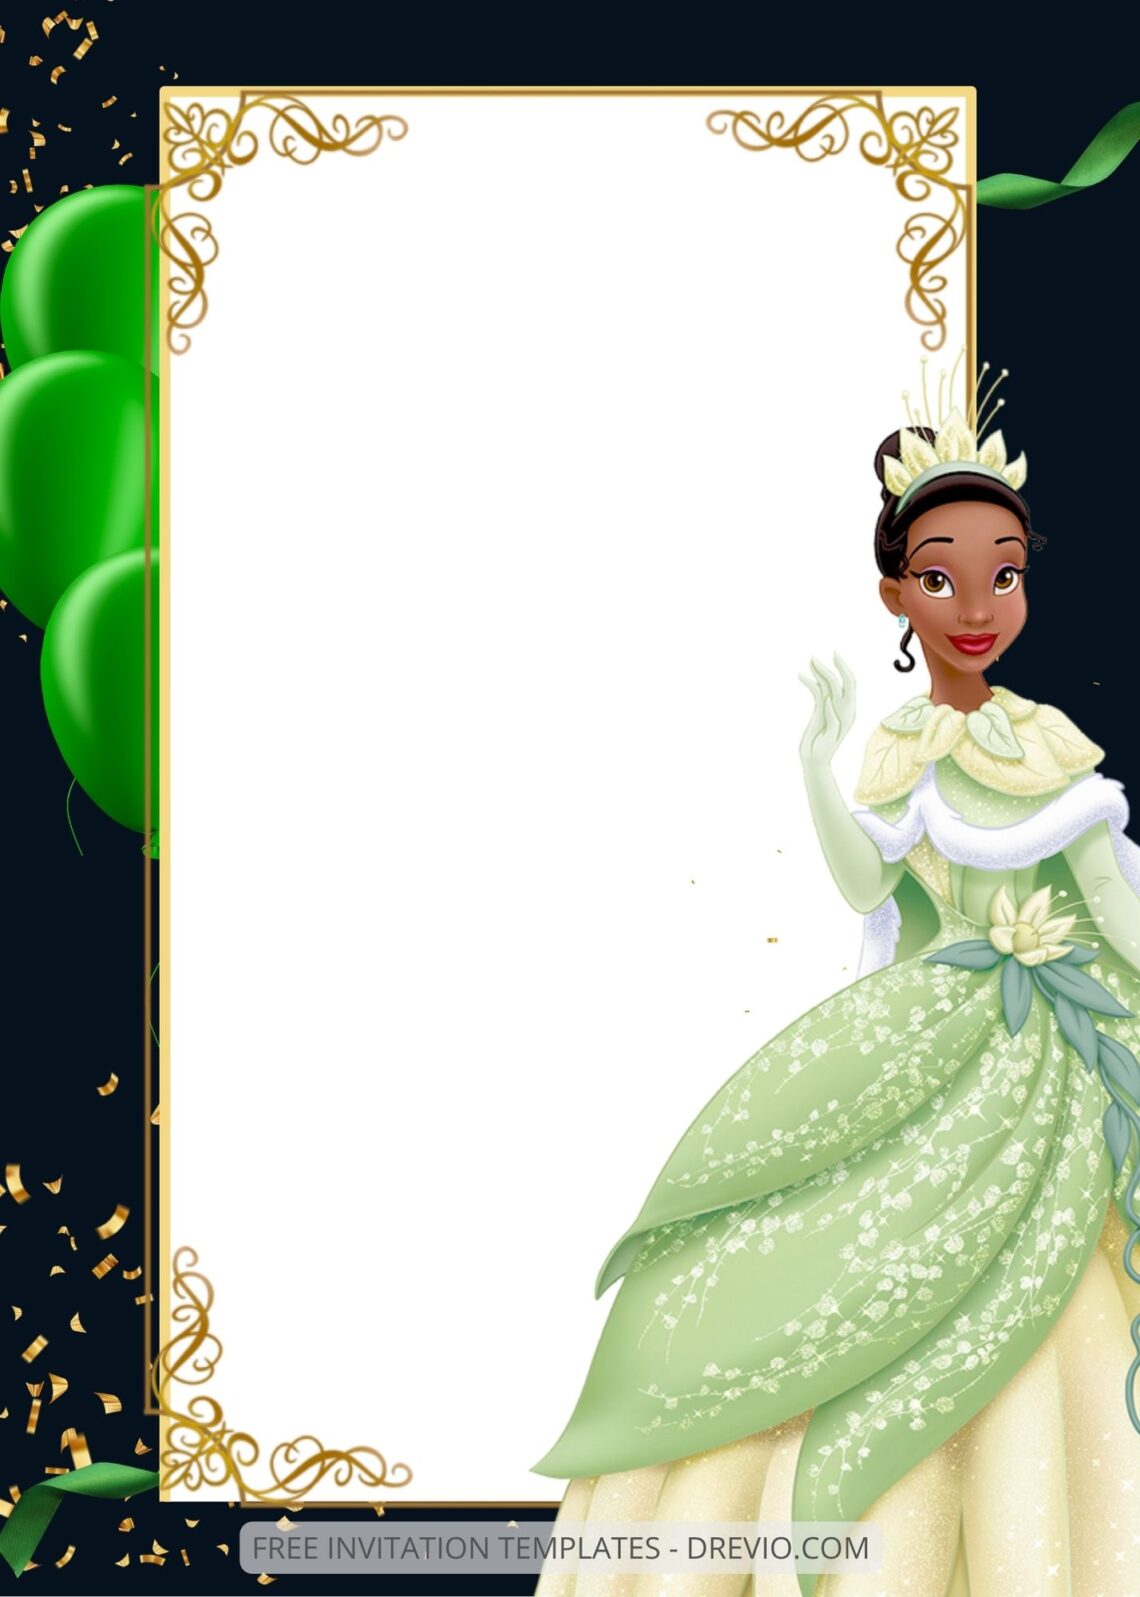 FREE EDITABLE - 9+ Princess Tiana Canva Birthday Invitation Templates Six